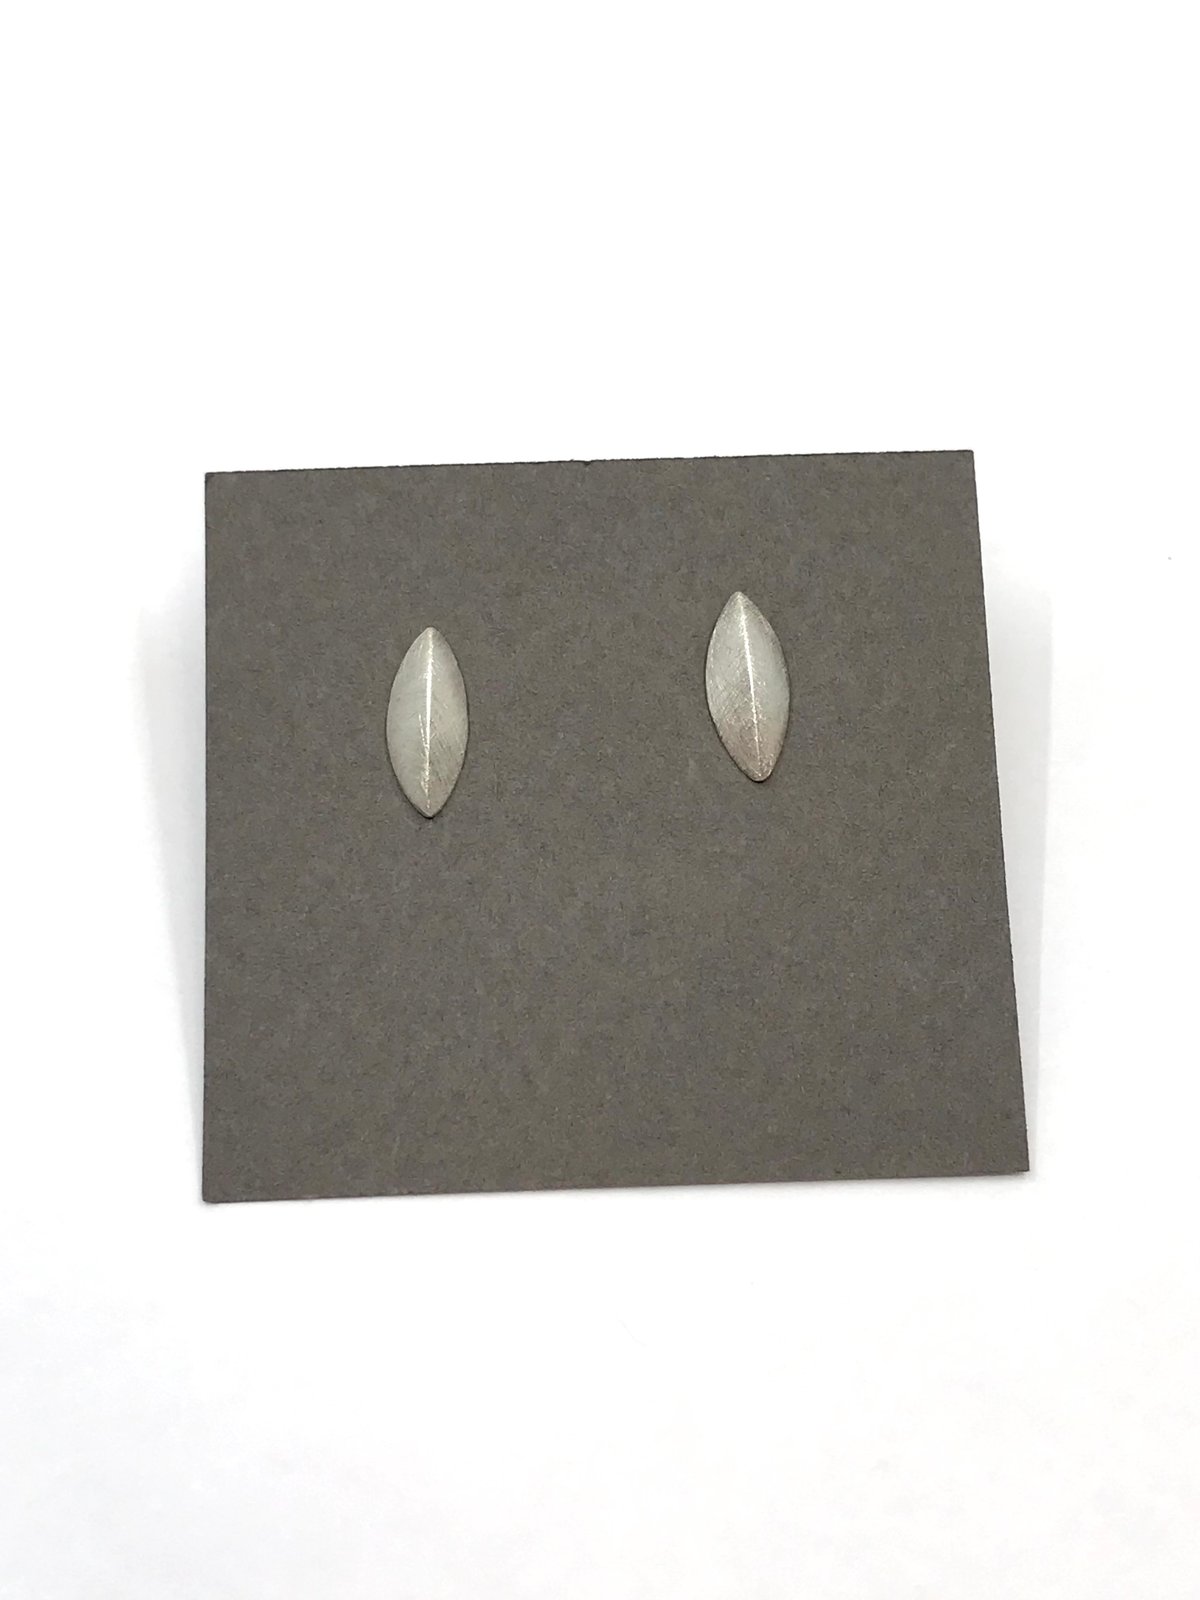 Tiny Silver Pod Earrings by Christiane Danna